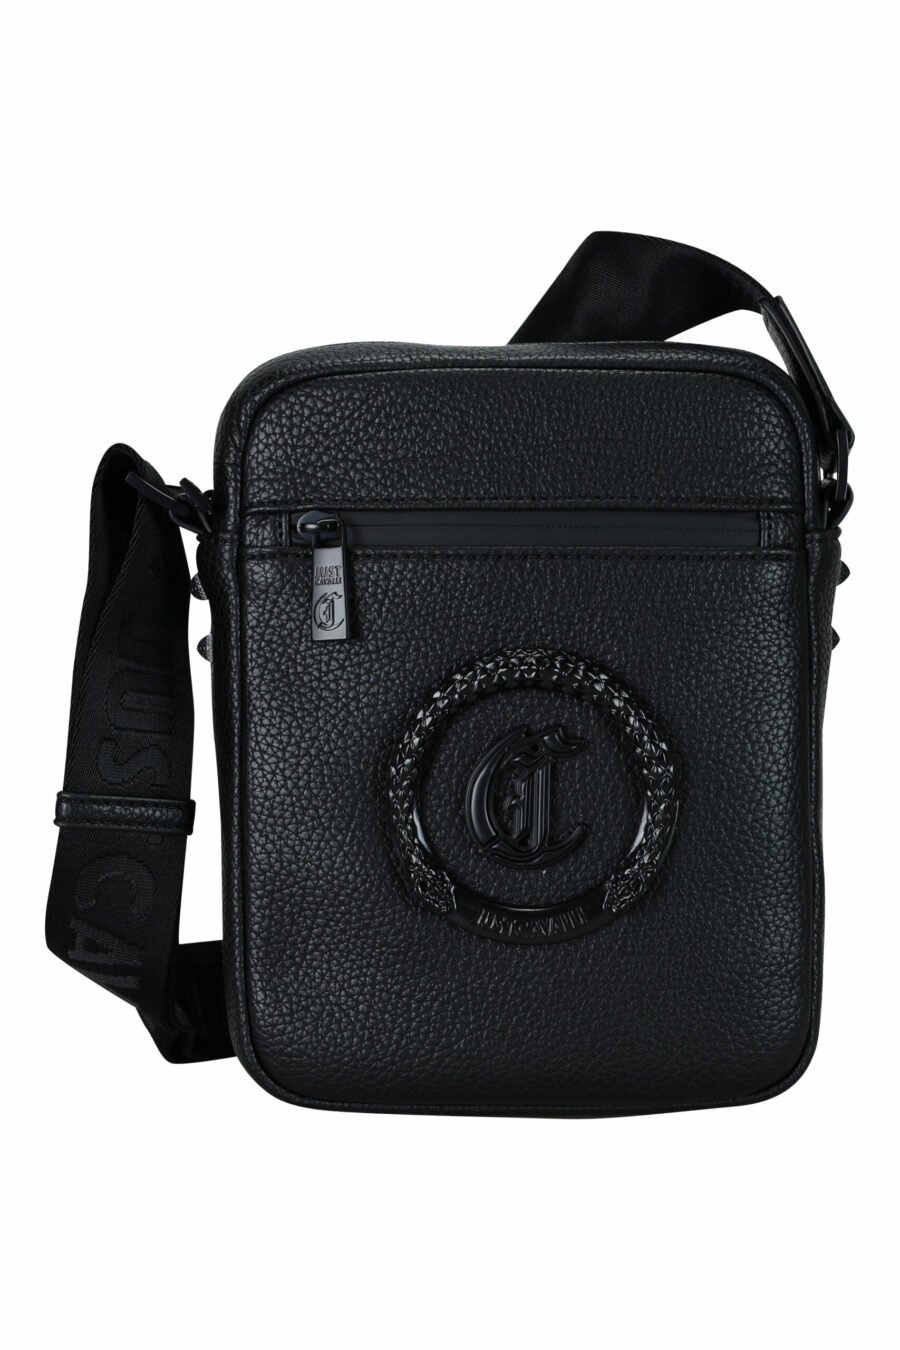 Black crossbody bag with circular metal "c" logo - 108087 scaled